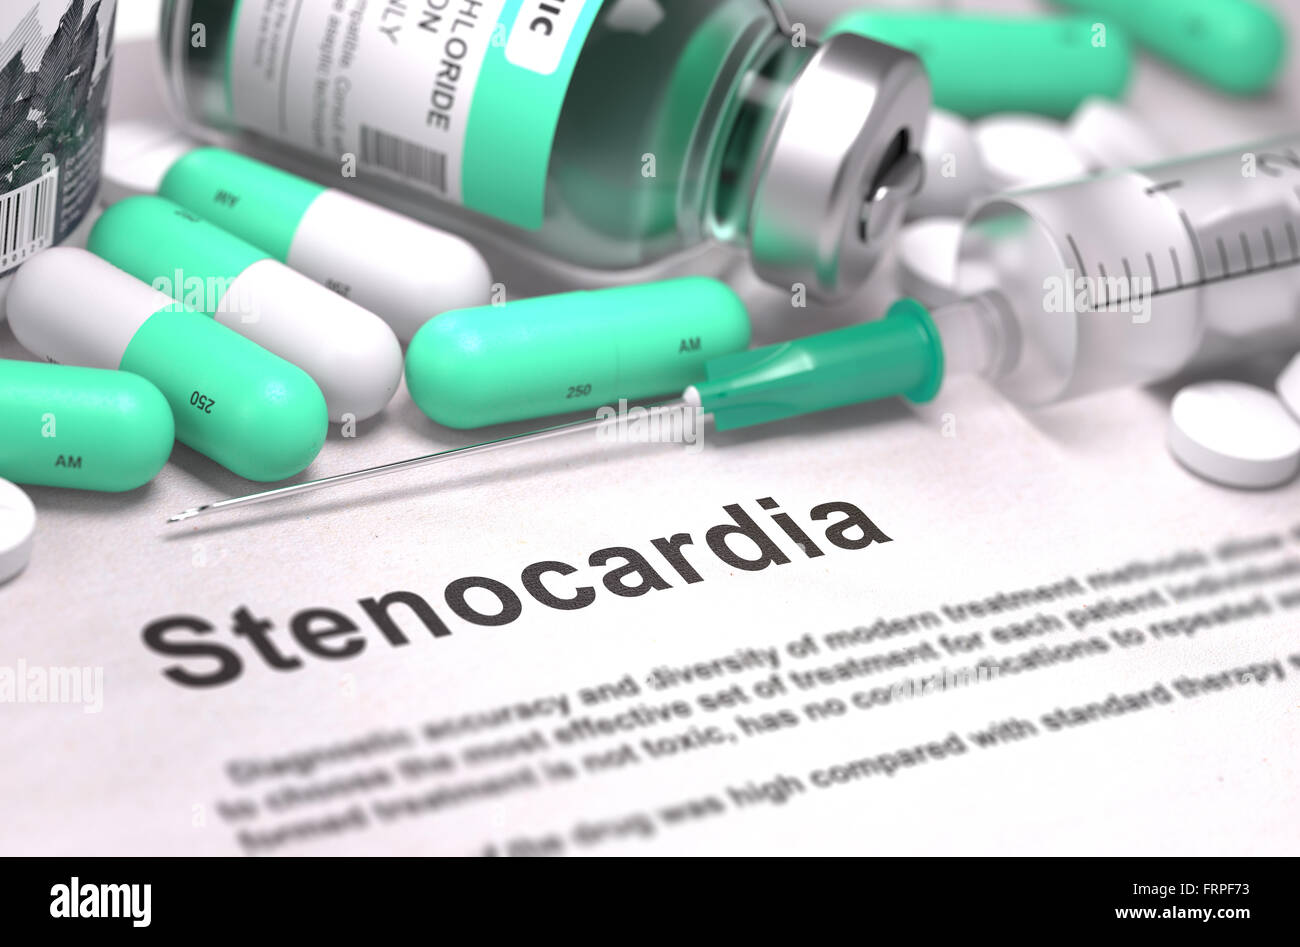 Stenocardia Diagnosis. Medical Concept. Stock Photo